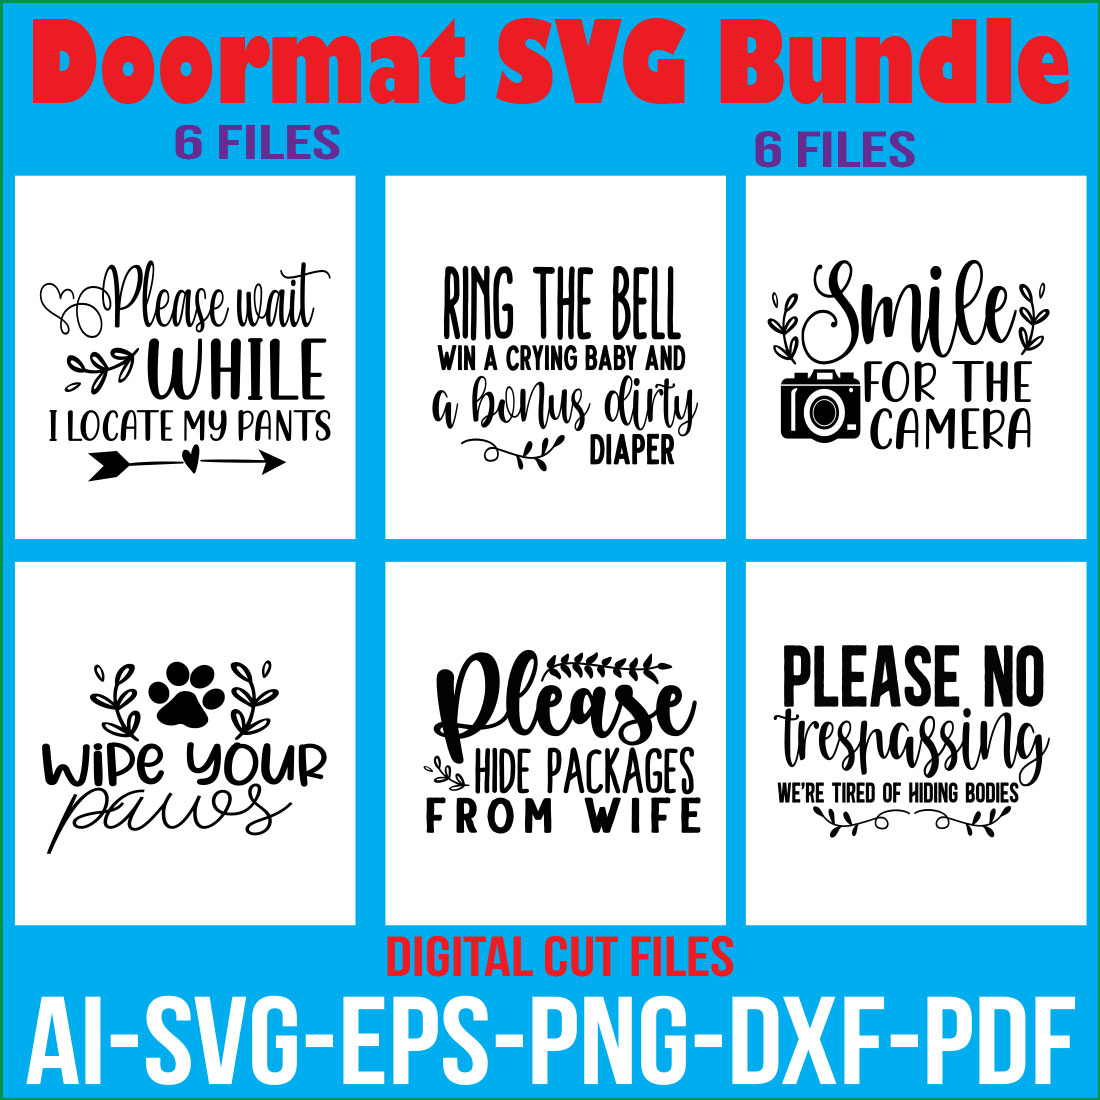 Doormat SVG Bundle cover image.